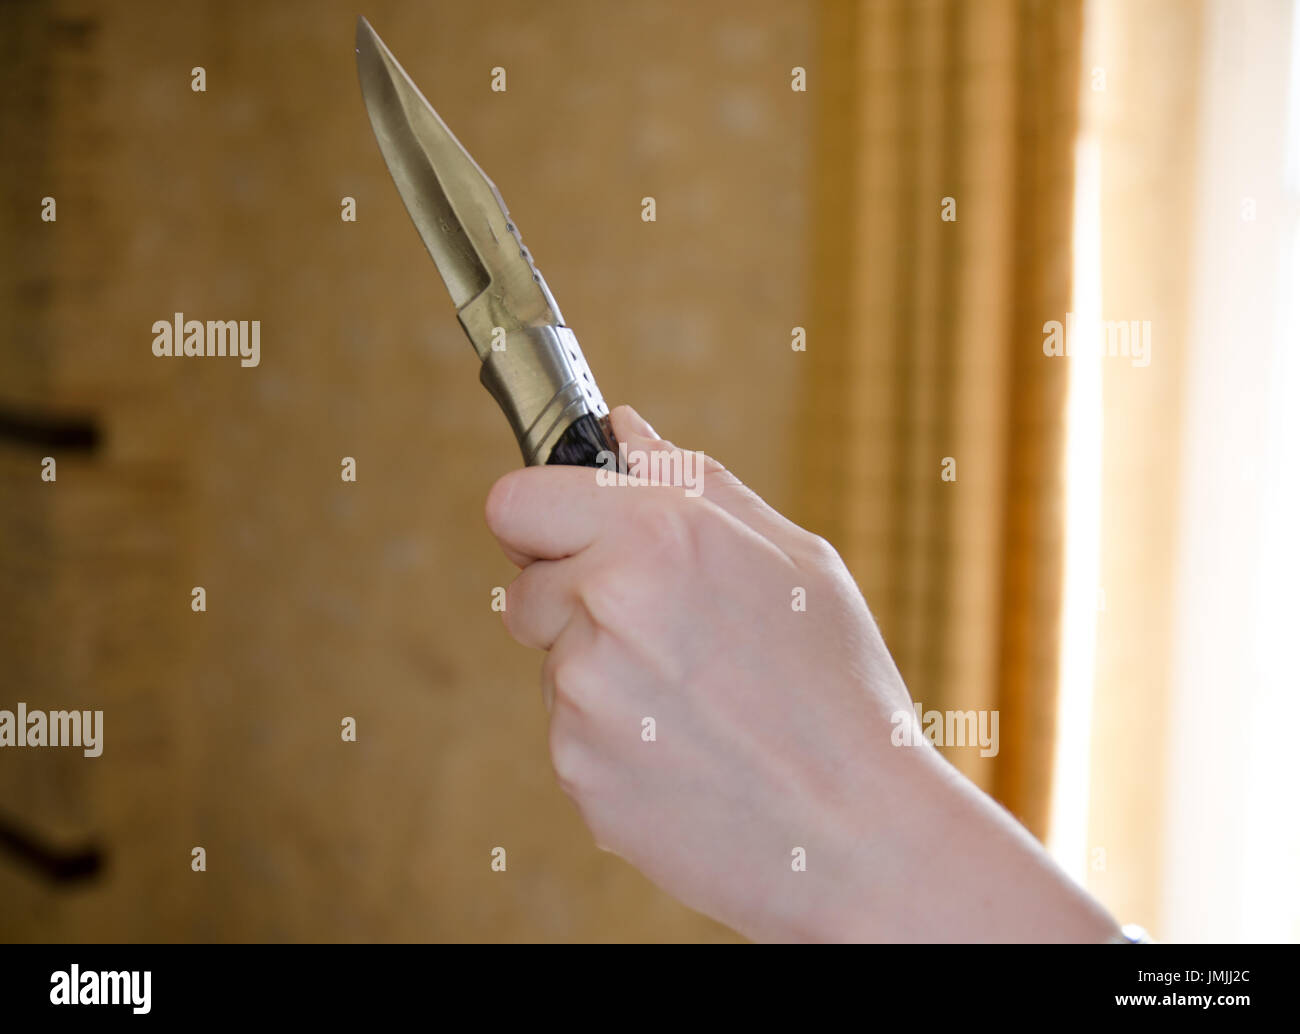 Concepto de robo o crimen de cuchilla con la mano sujeta la cuchilla dentro de casa Foto de stock